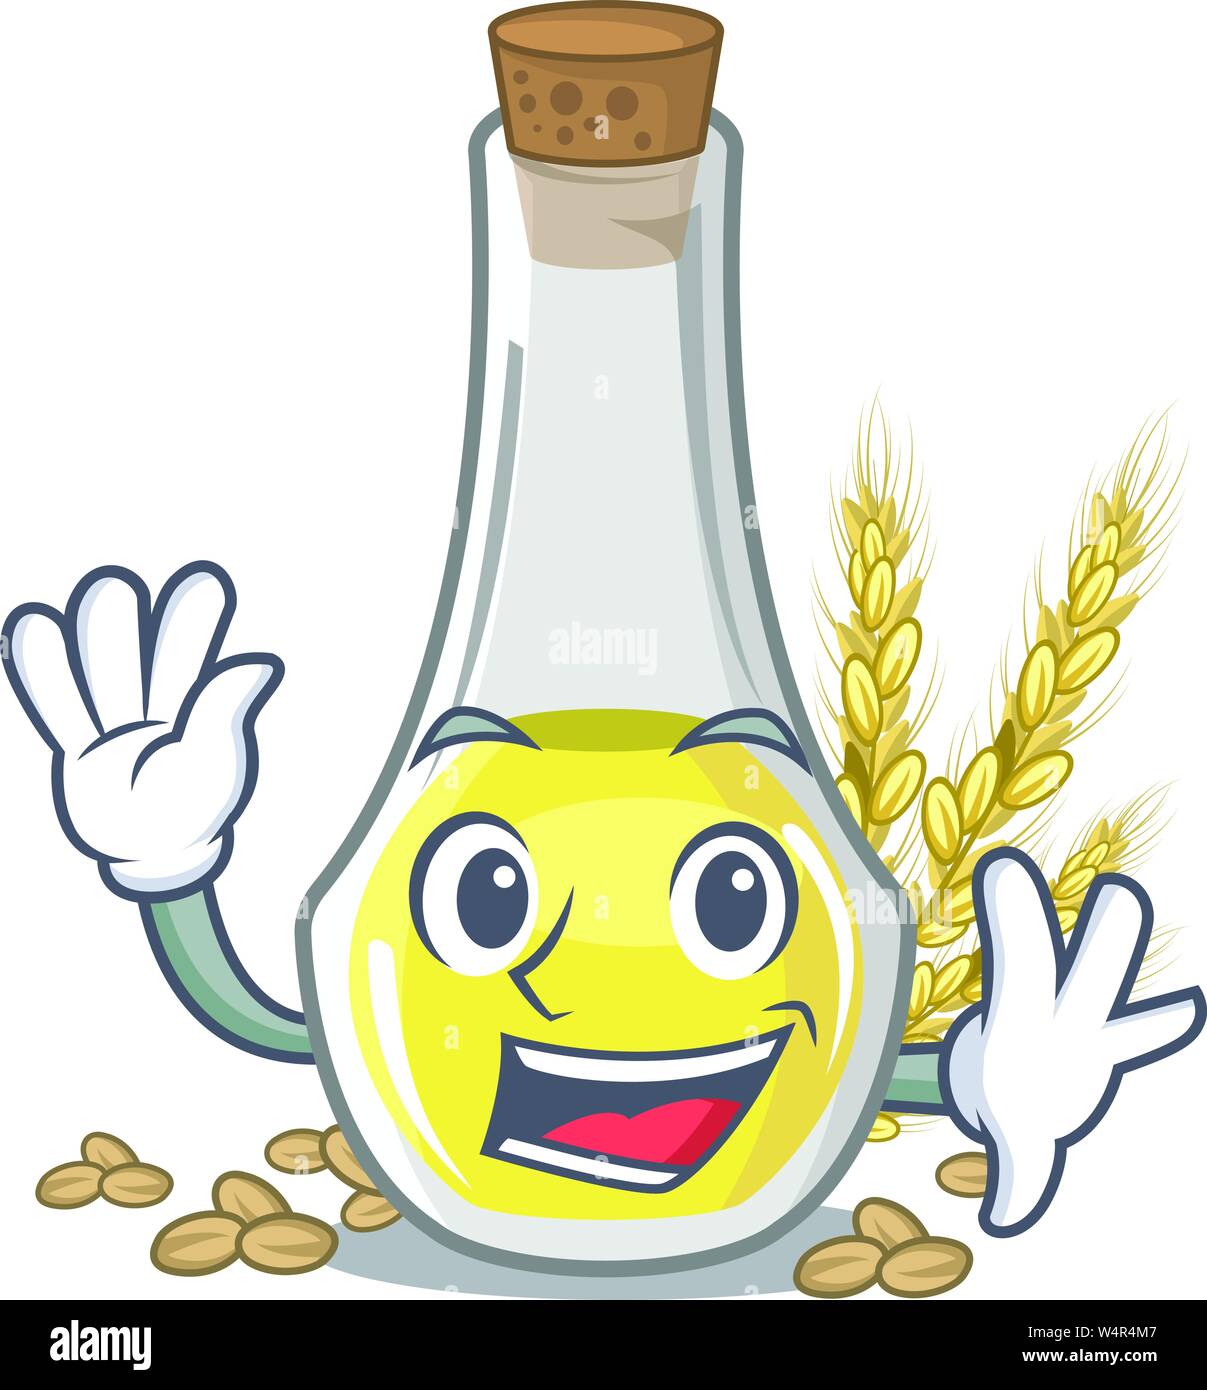 Waving wheat germ oil the mascot shape vector illustration Stock Vector